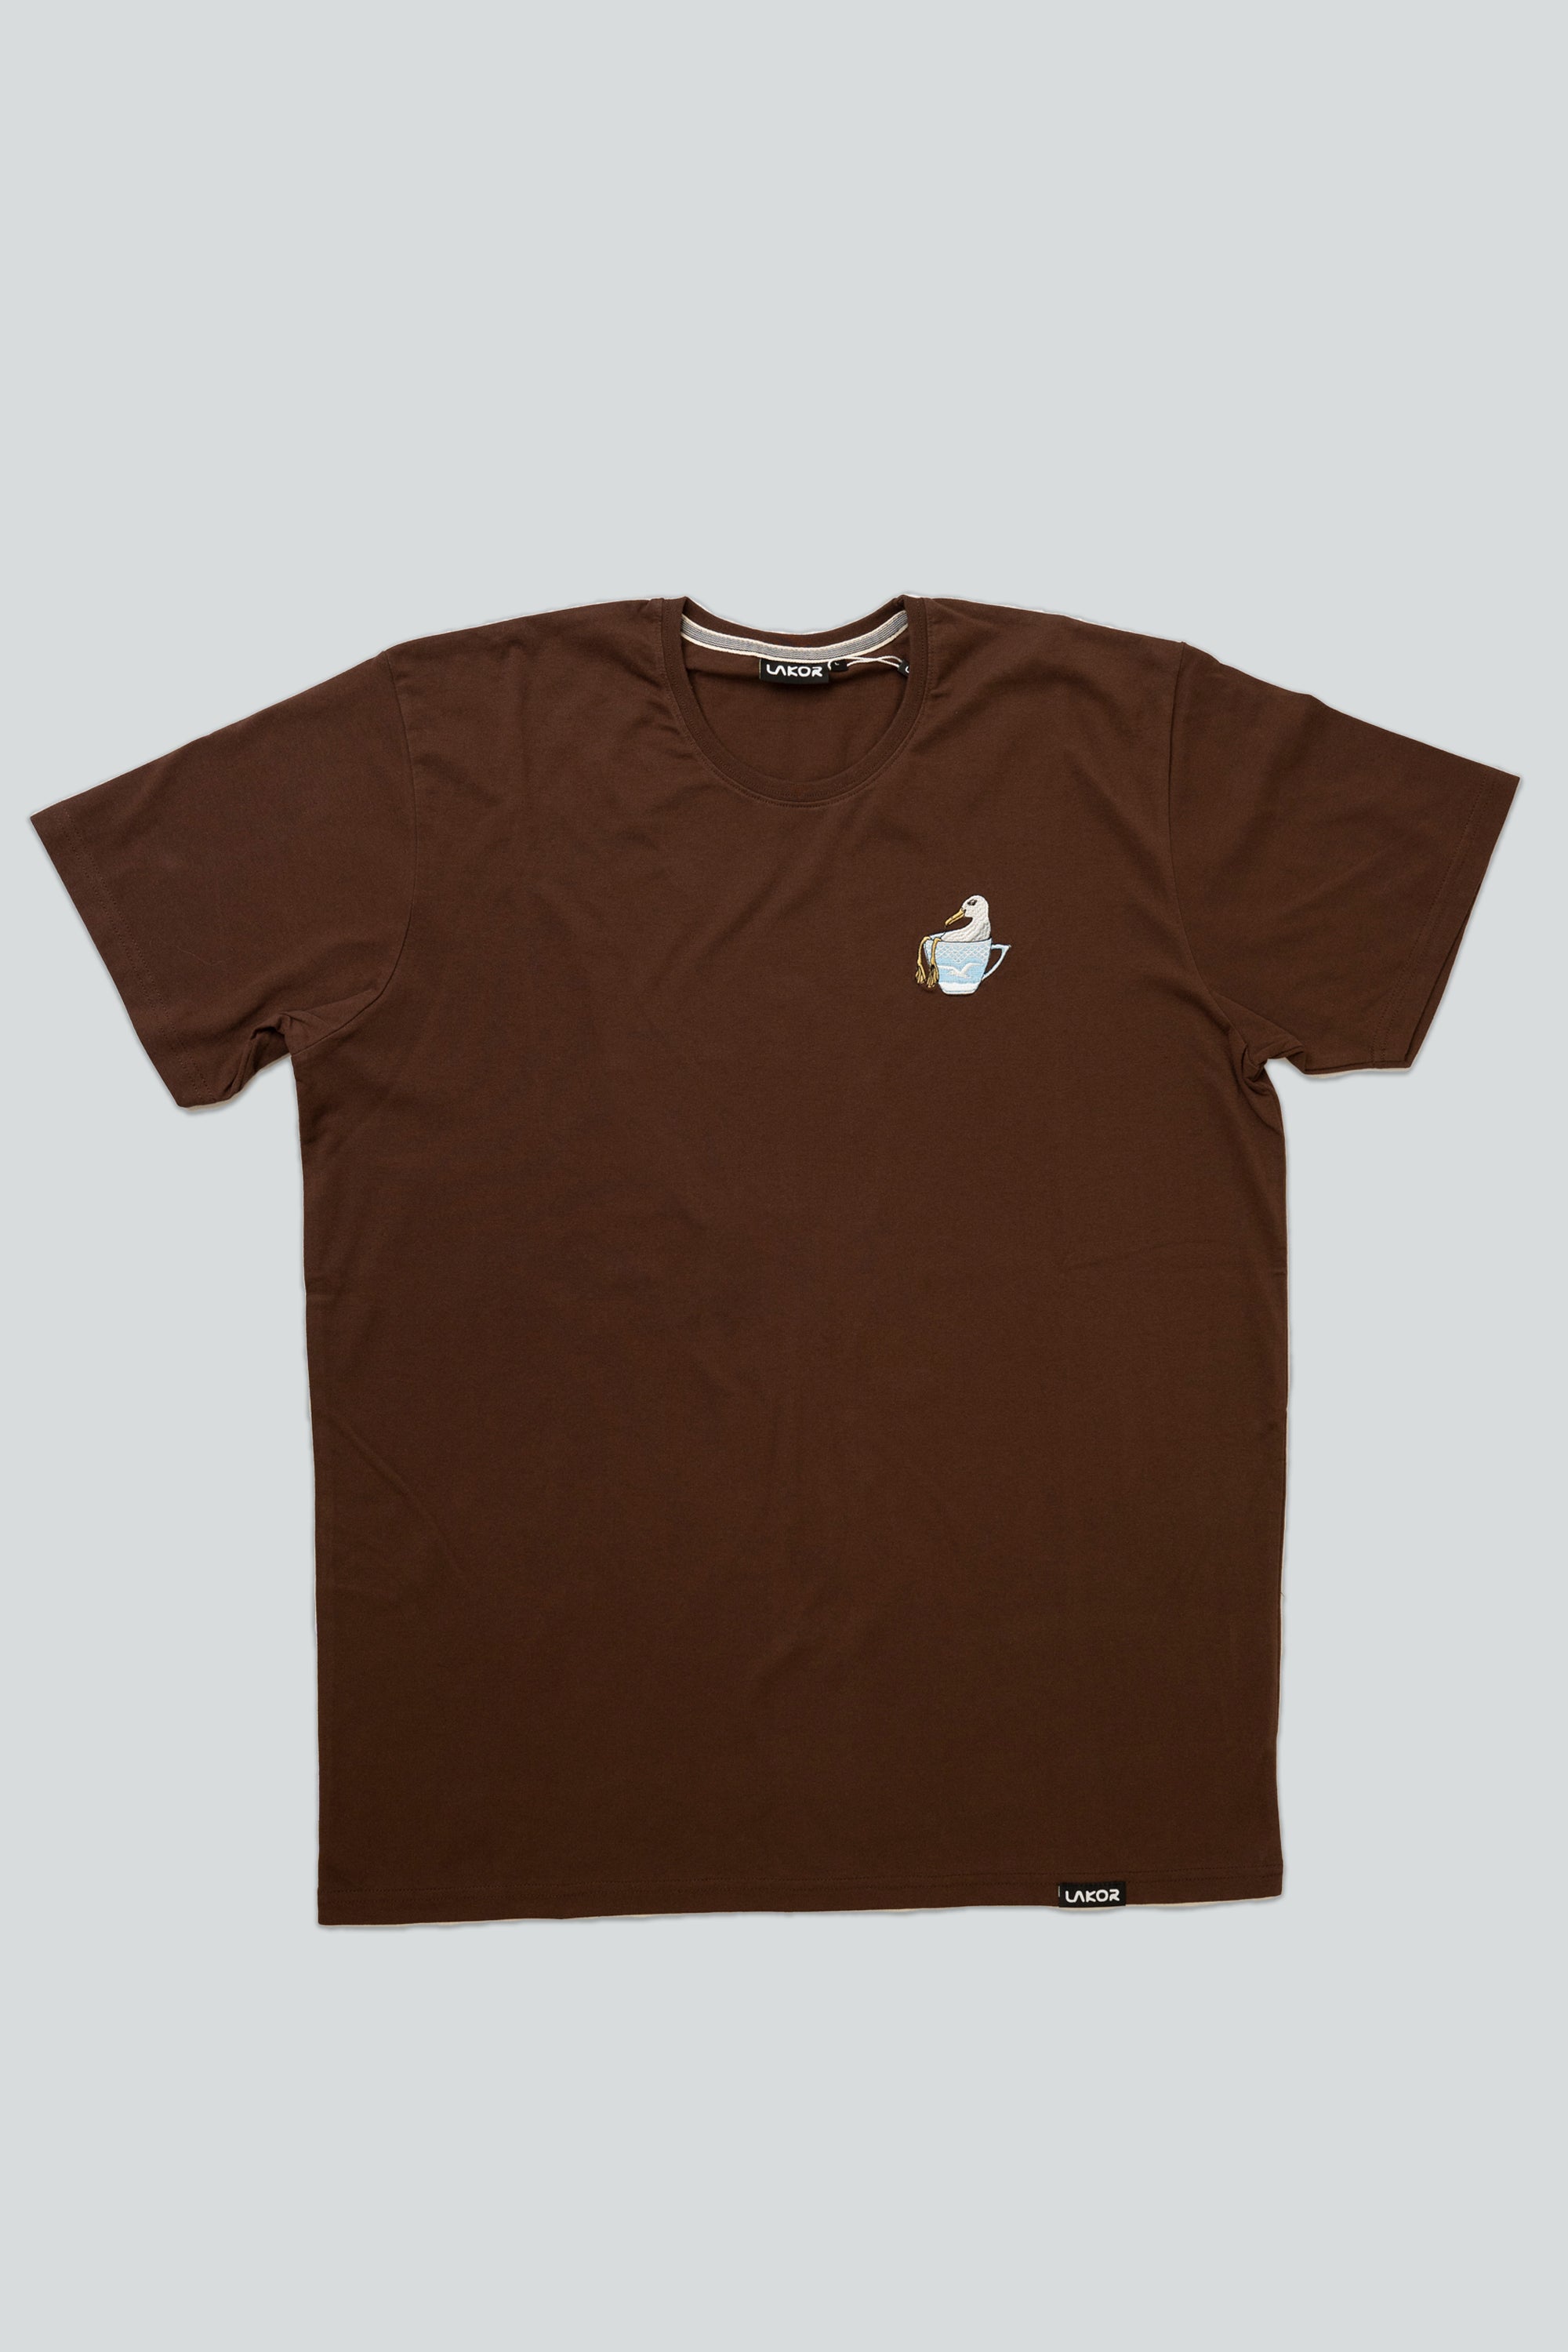 Mini Seagull In A Cup T-shirt